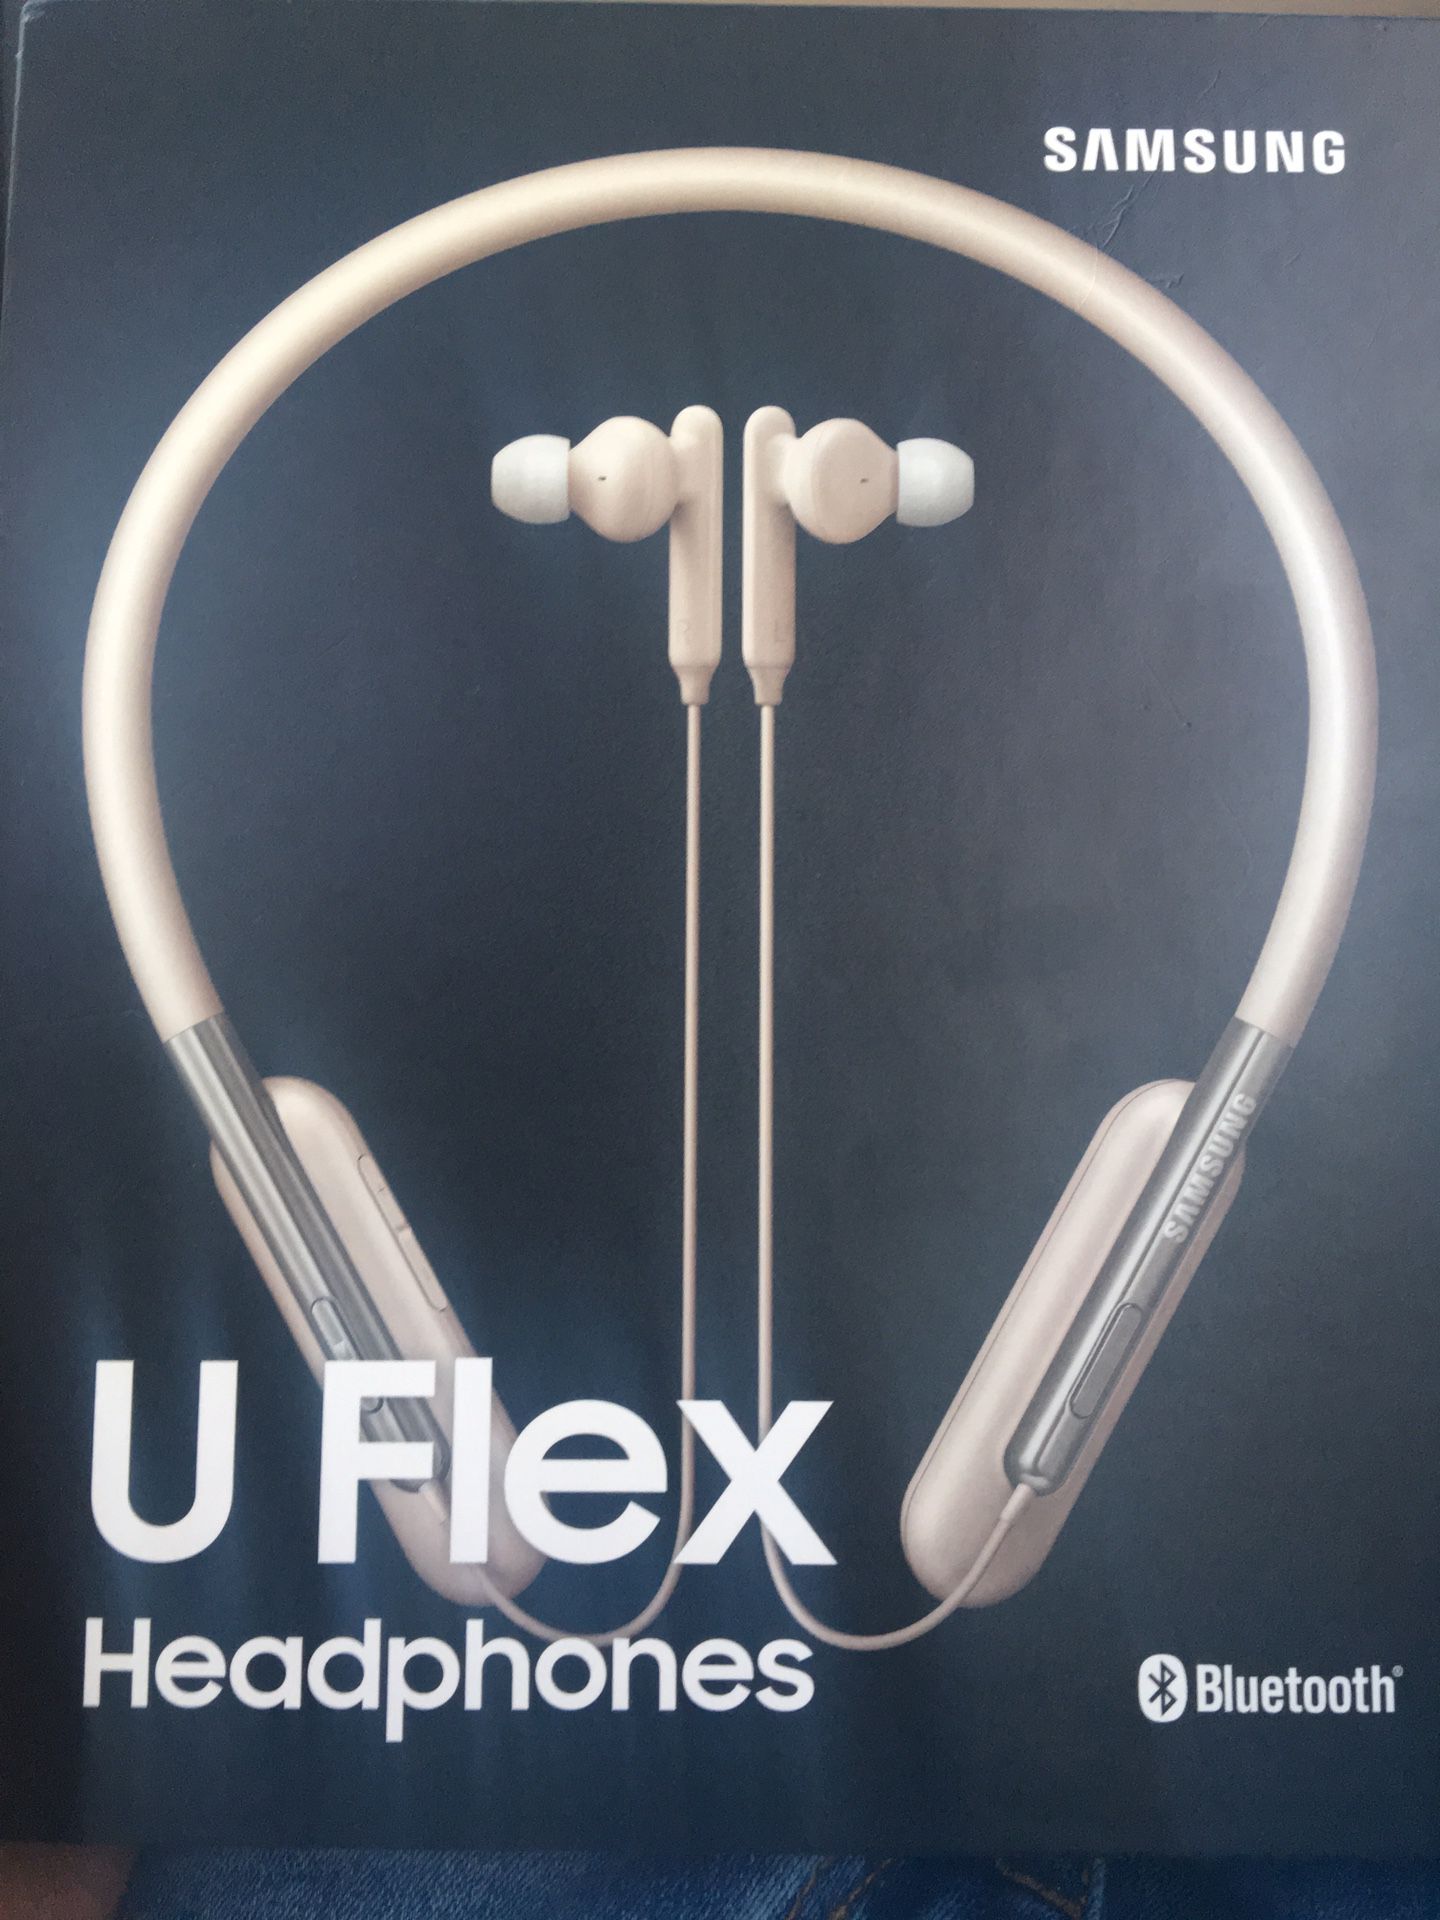 U flex Headphones Bluetooth Style